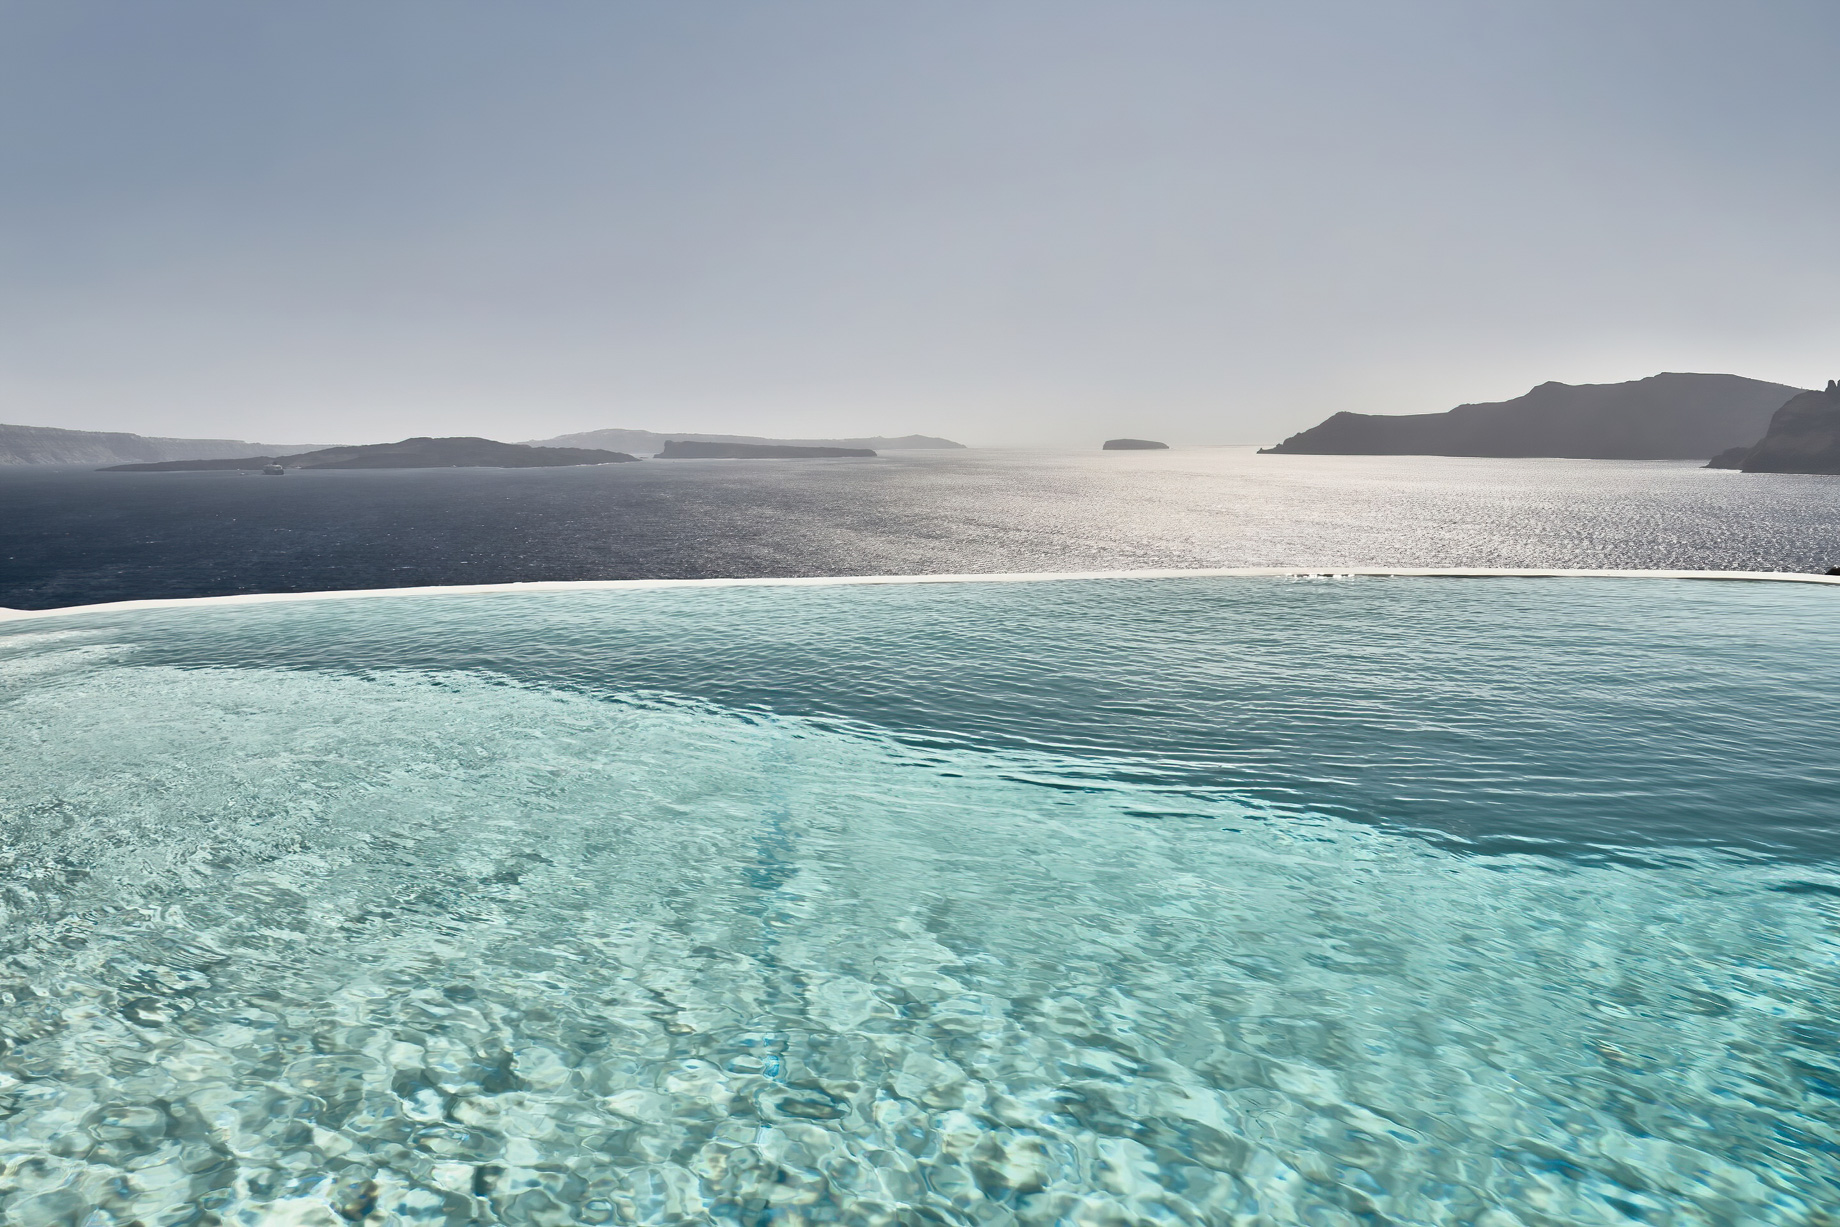 Mystique Hotel Santorini – Oia, Santorini Island, Greece - Clifftop Infinity Pool Ocean View